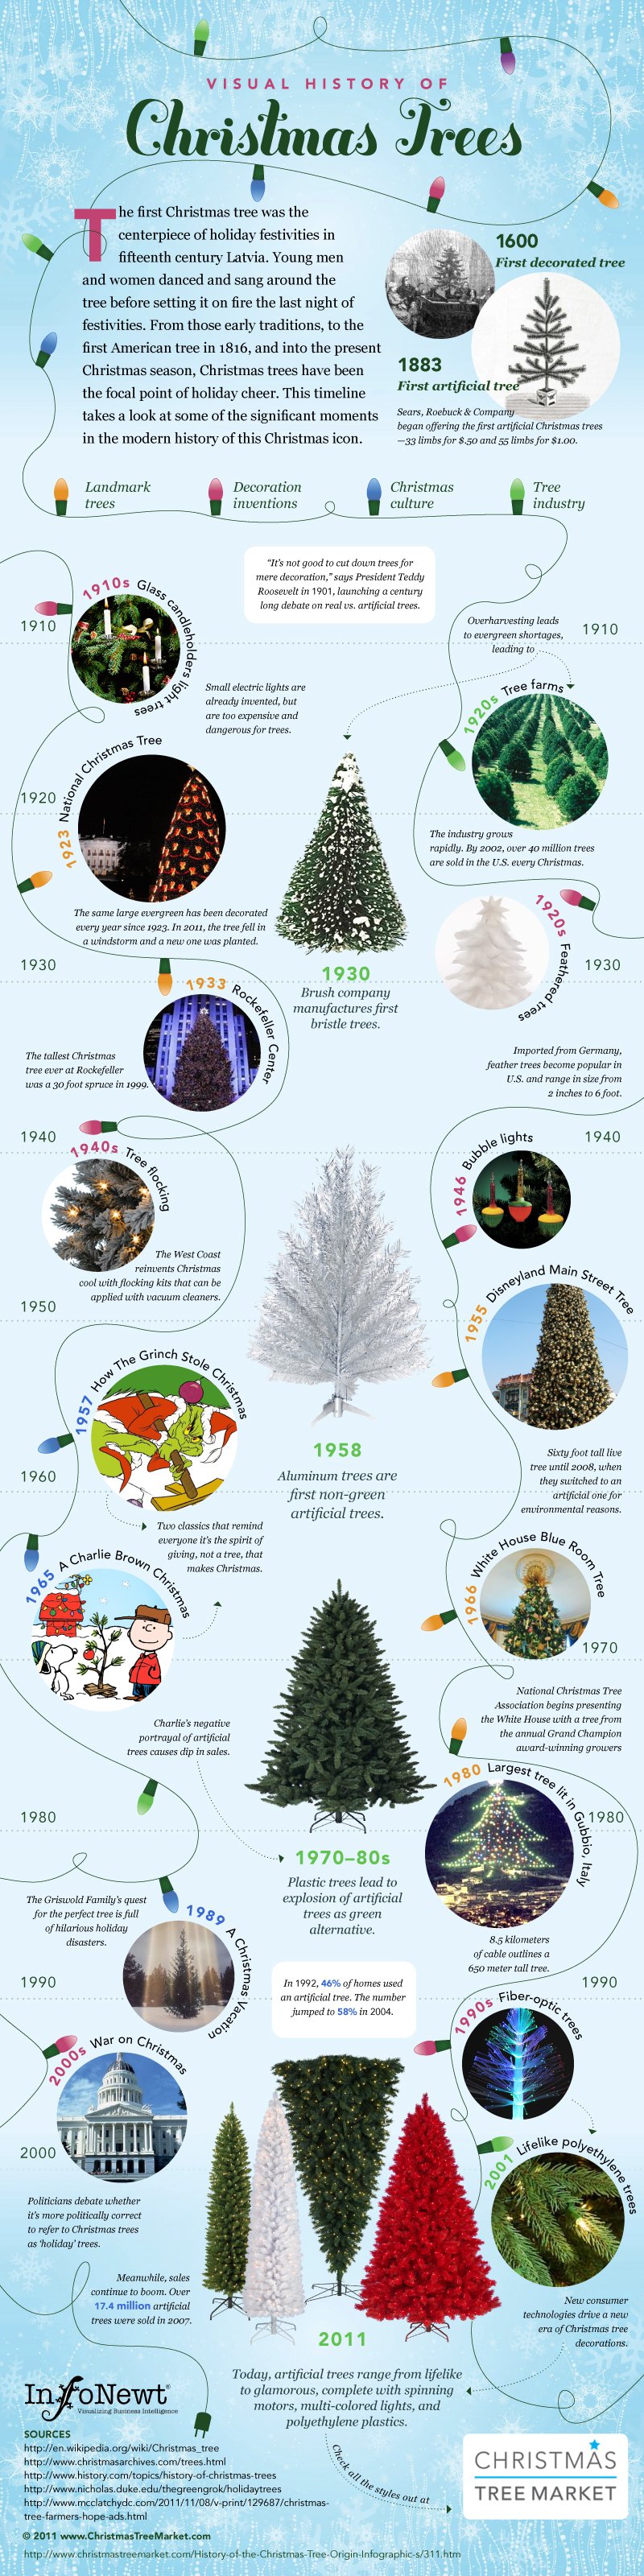 Visual History of Christmas Tress